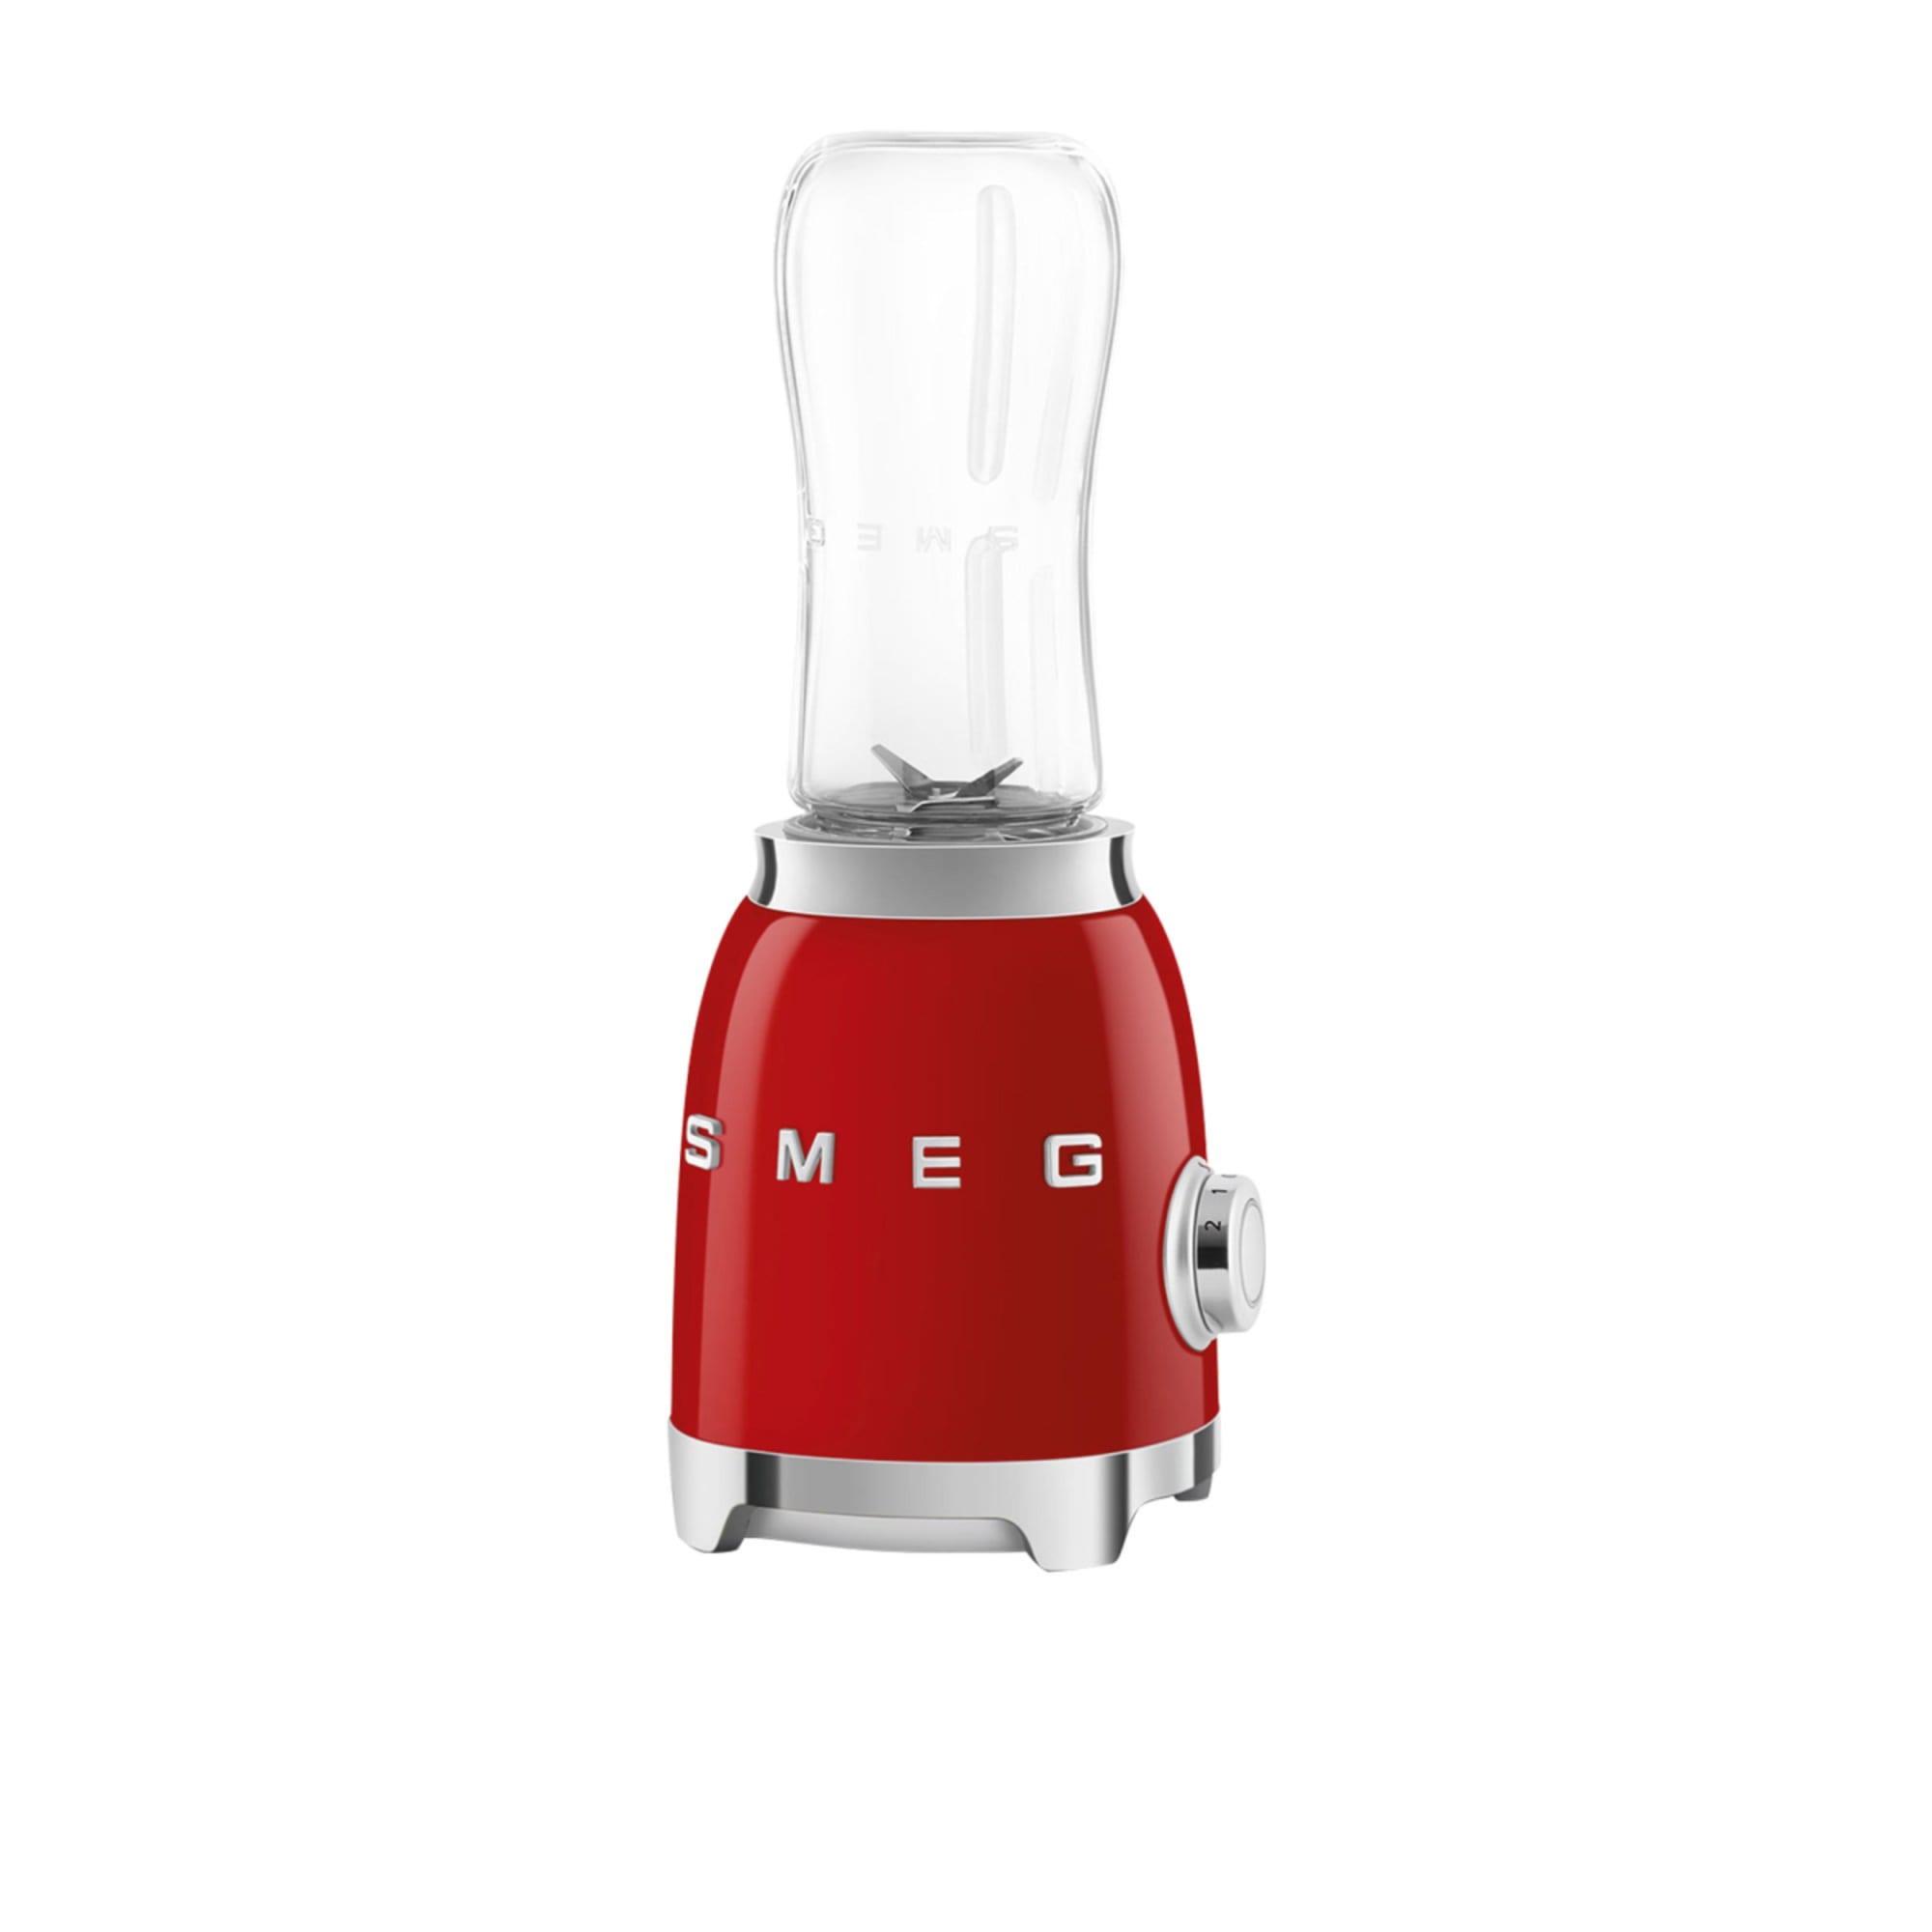 Smeg 50's Retro Style Mini Blender Red Image 3